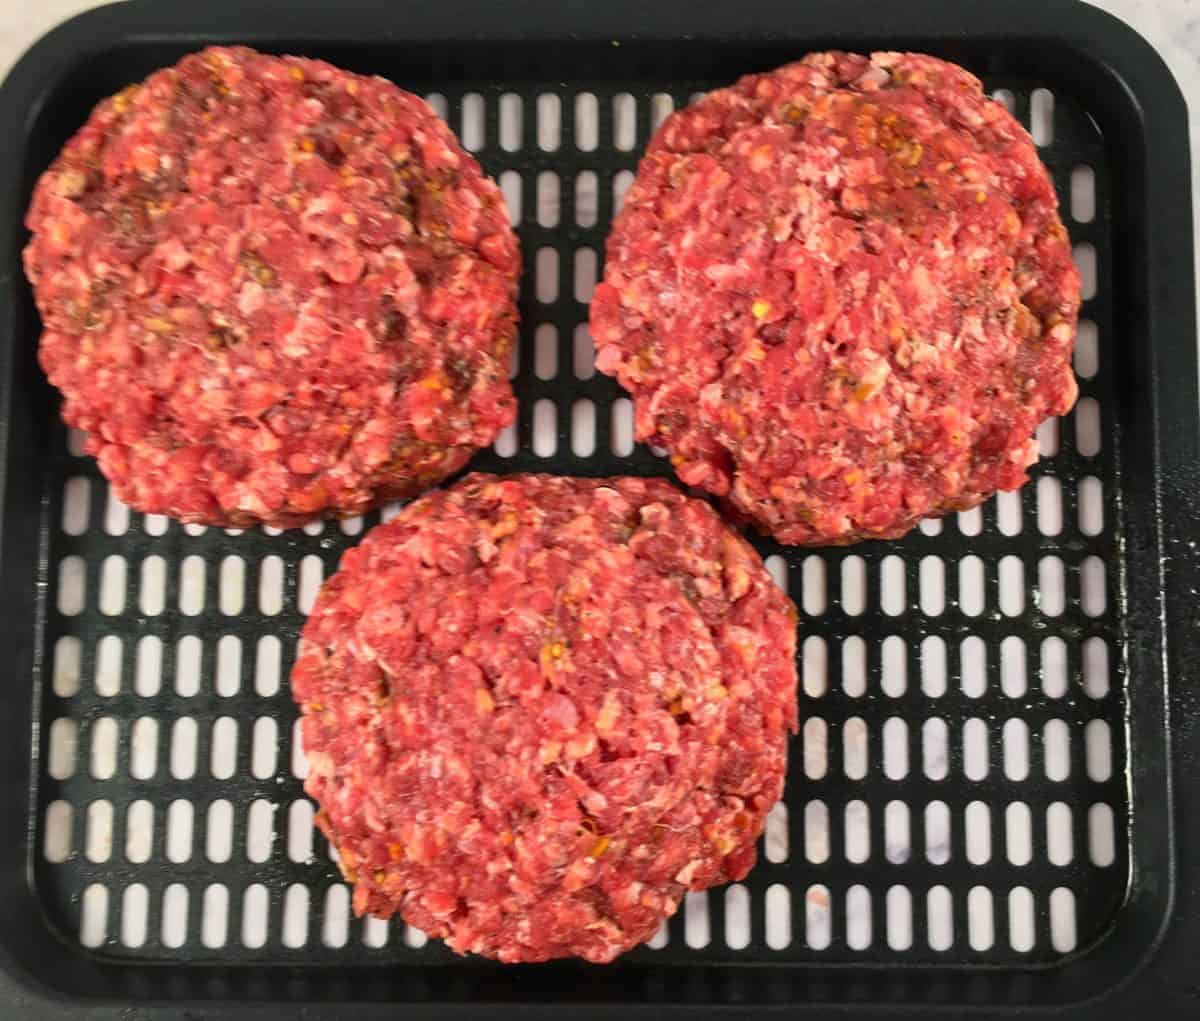 Stuffed-hamburgers-on-air-fryer-tray